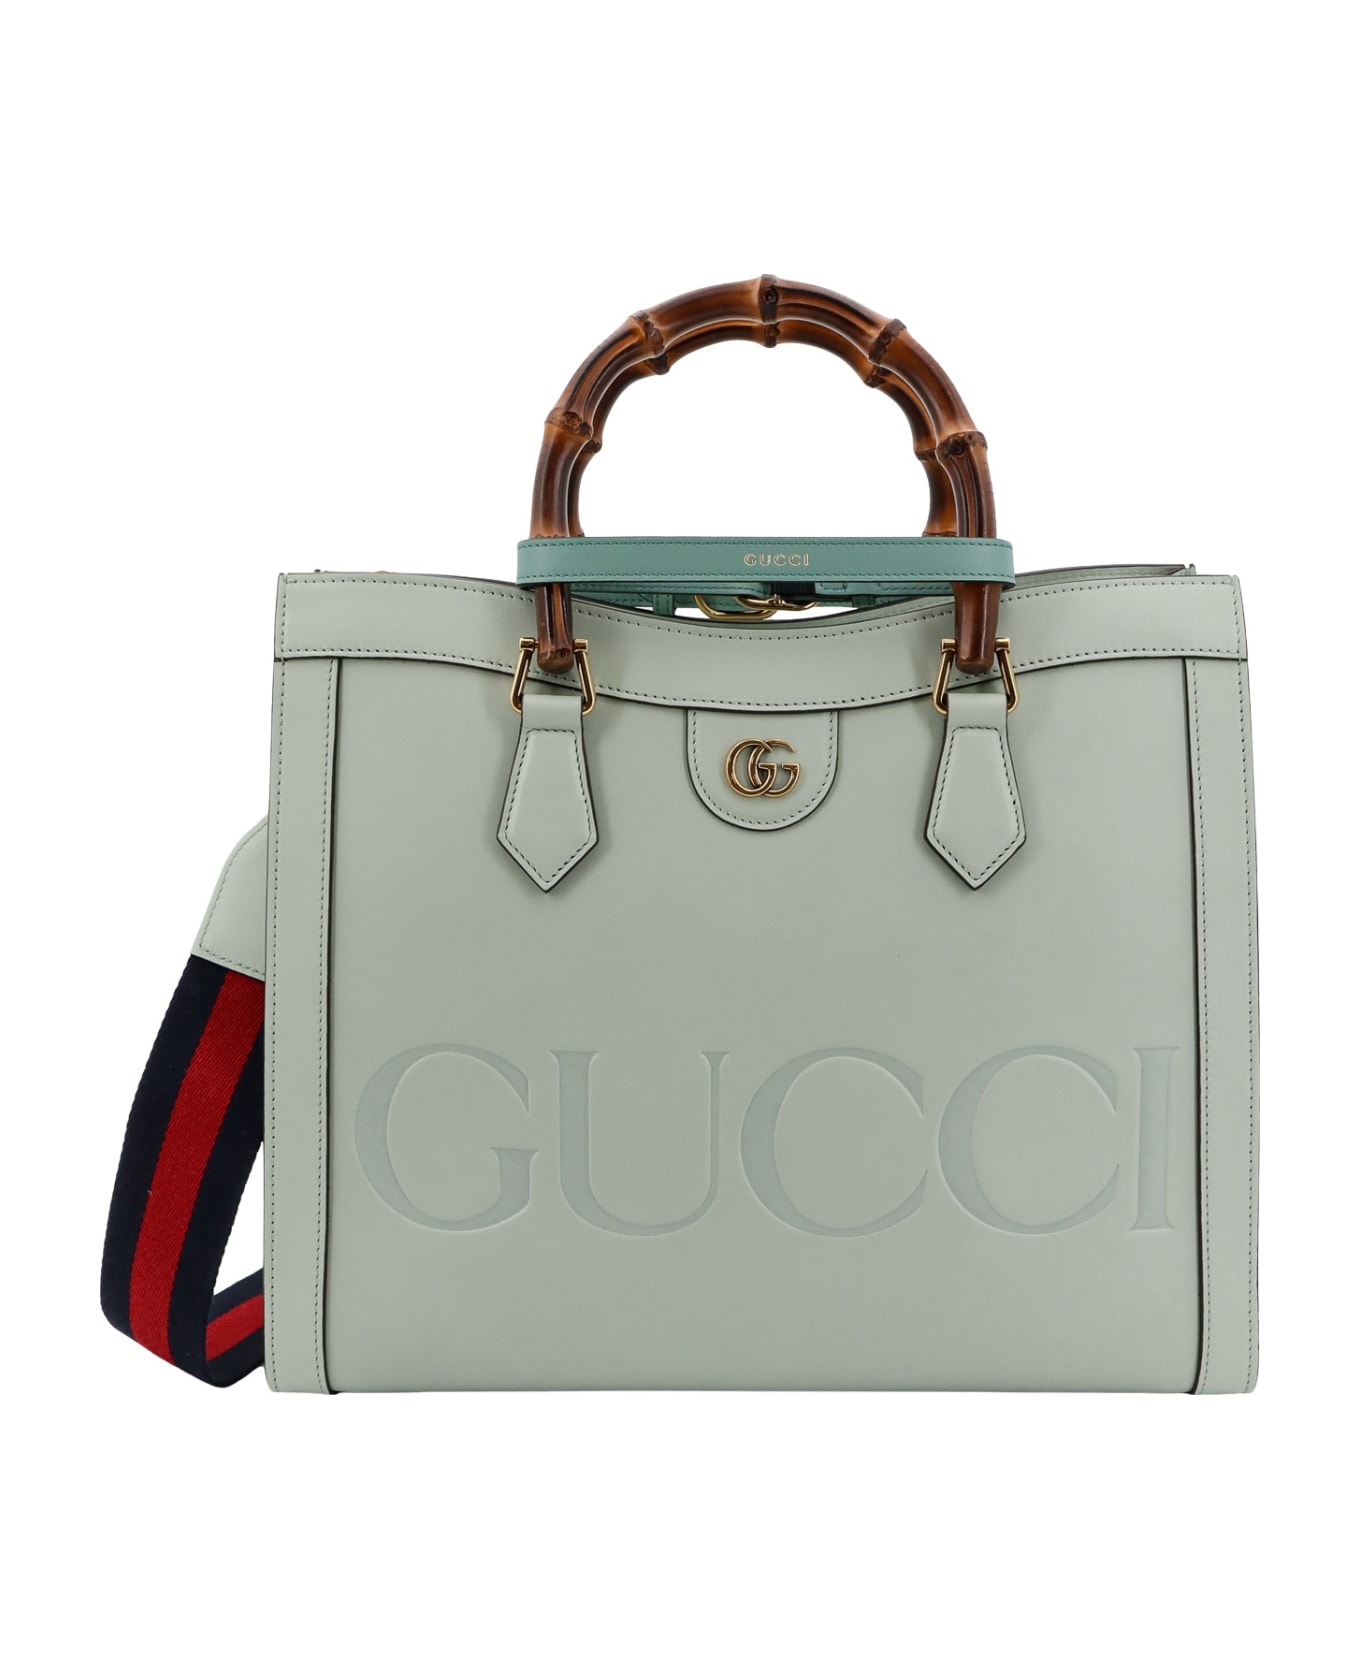 Gucci Diana Handbag - Green トートバッグ